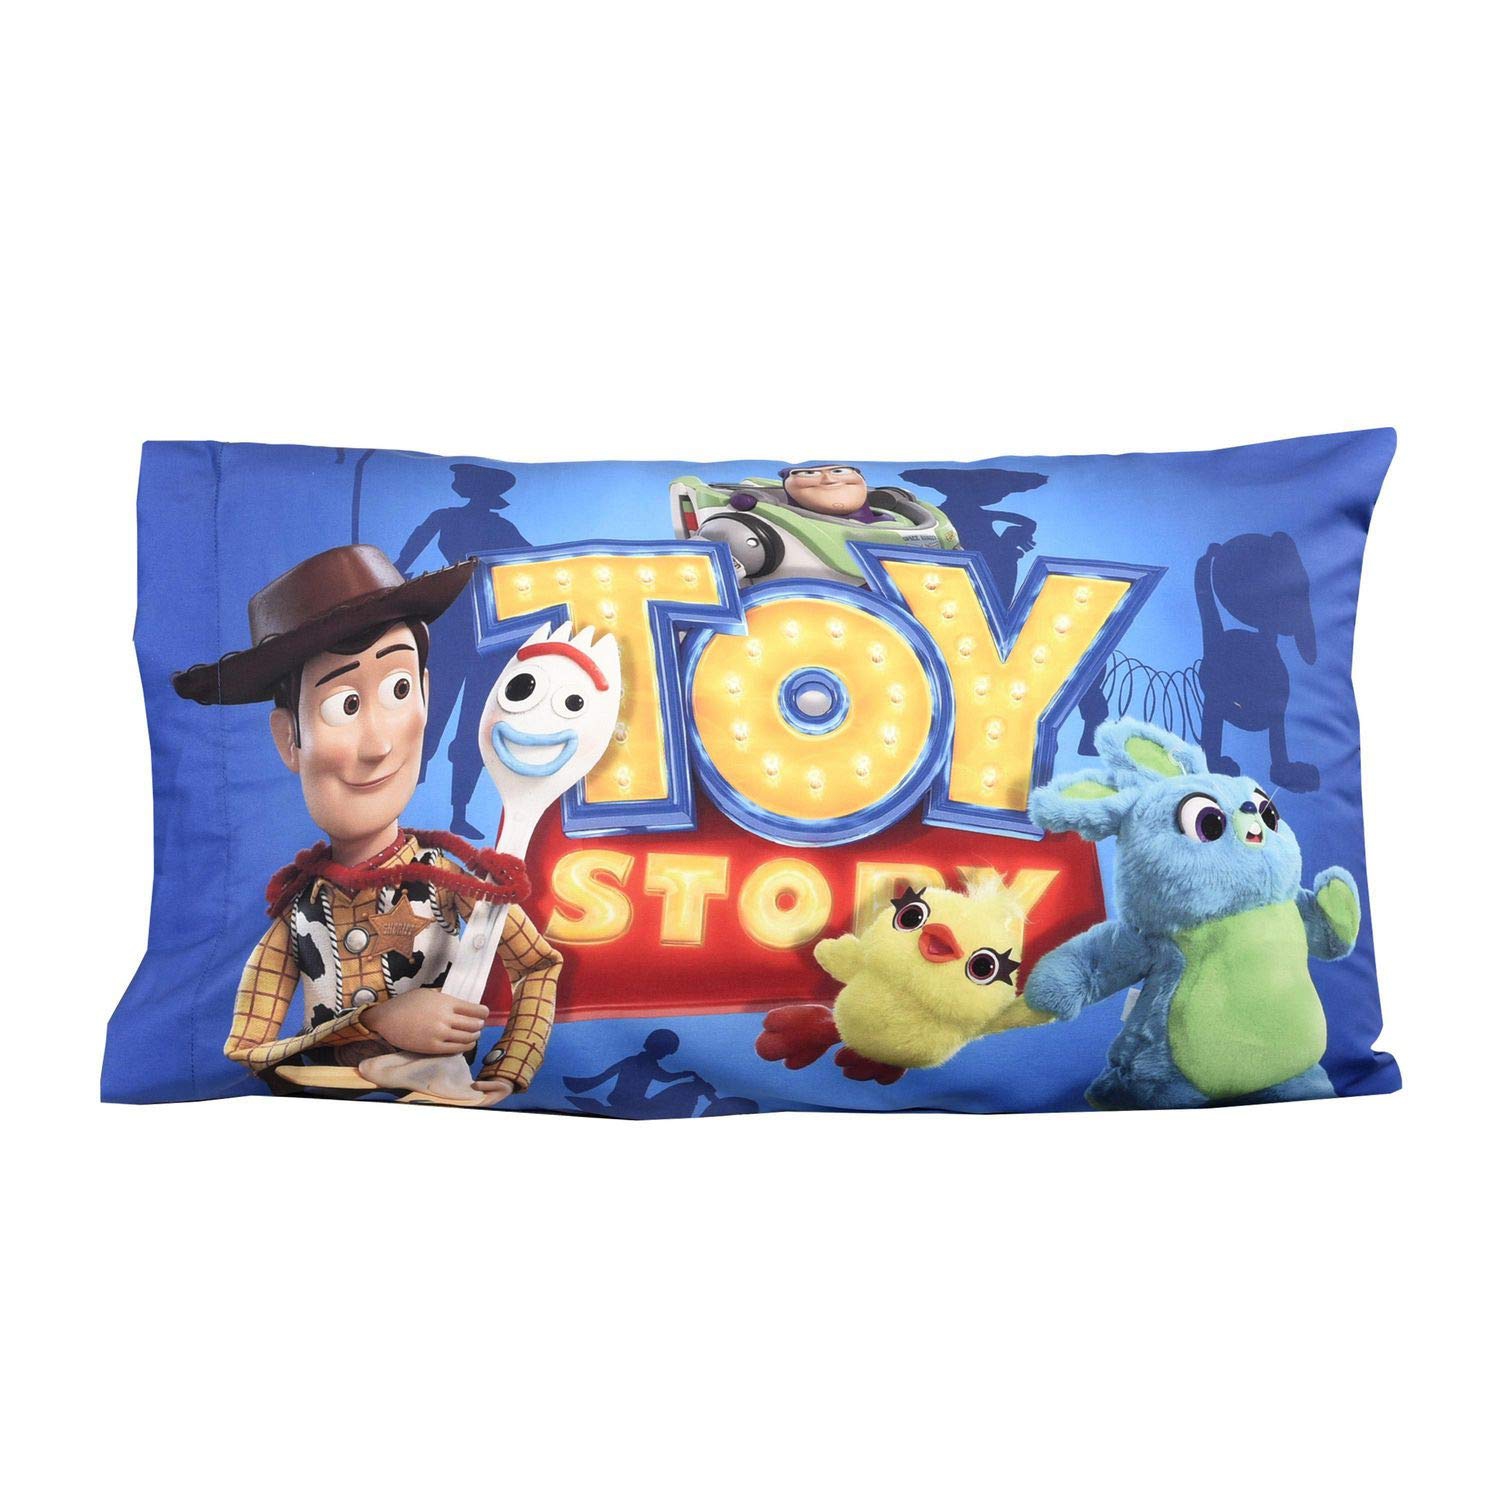 Disney Pixar Toy Story 4 Standard Pillowcase for Kids 20 x 30 Inch [1 Piece Pillowcase Only]